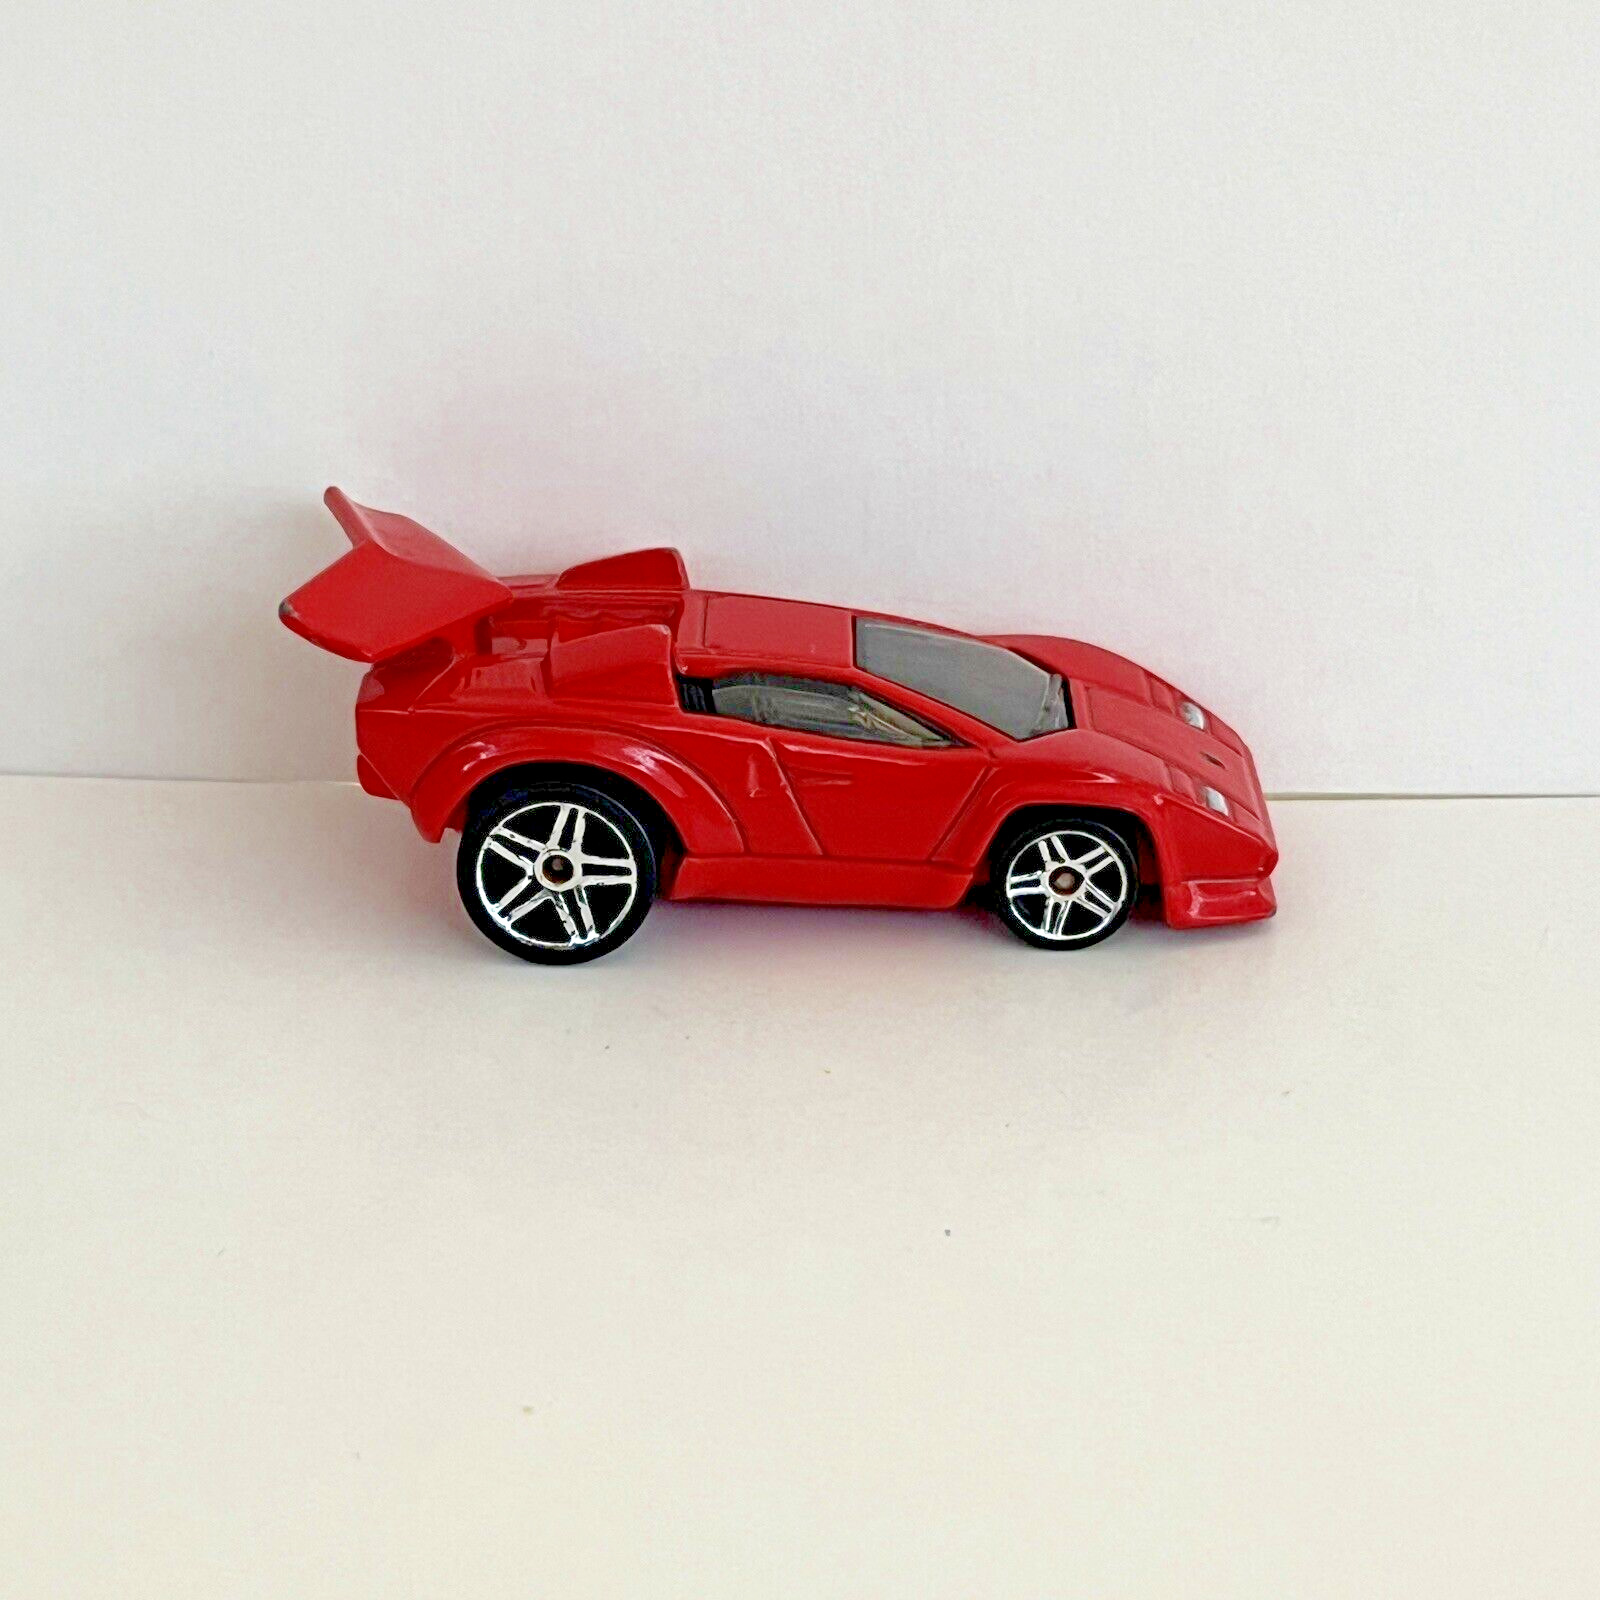 Hot Wheels Lamborghini 2004 Red Malaysia Base Toy Car